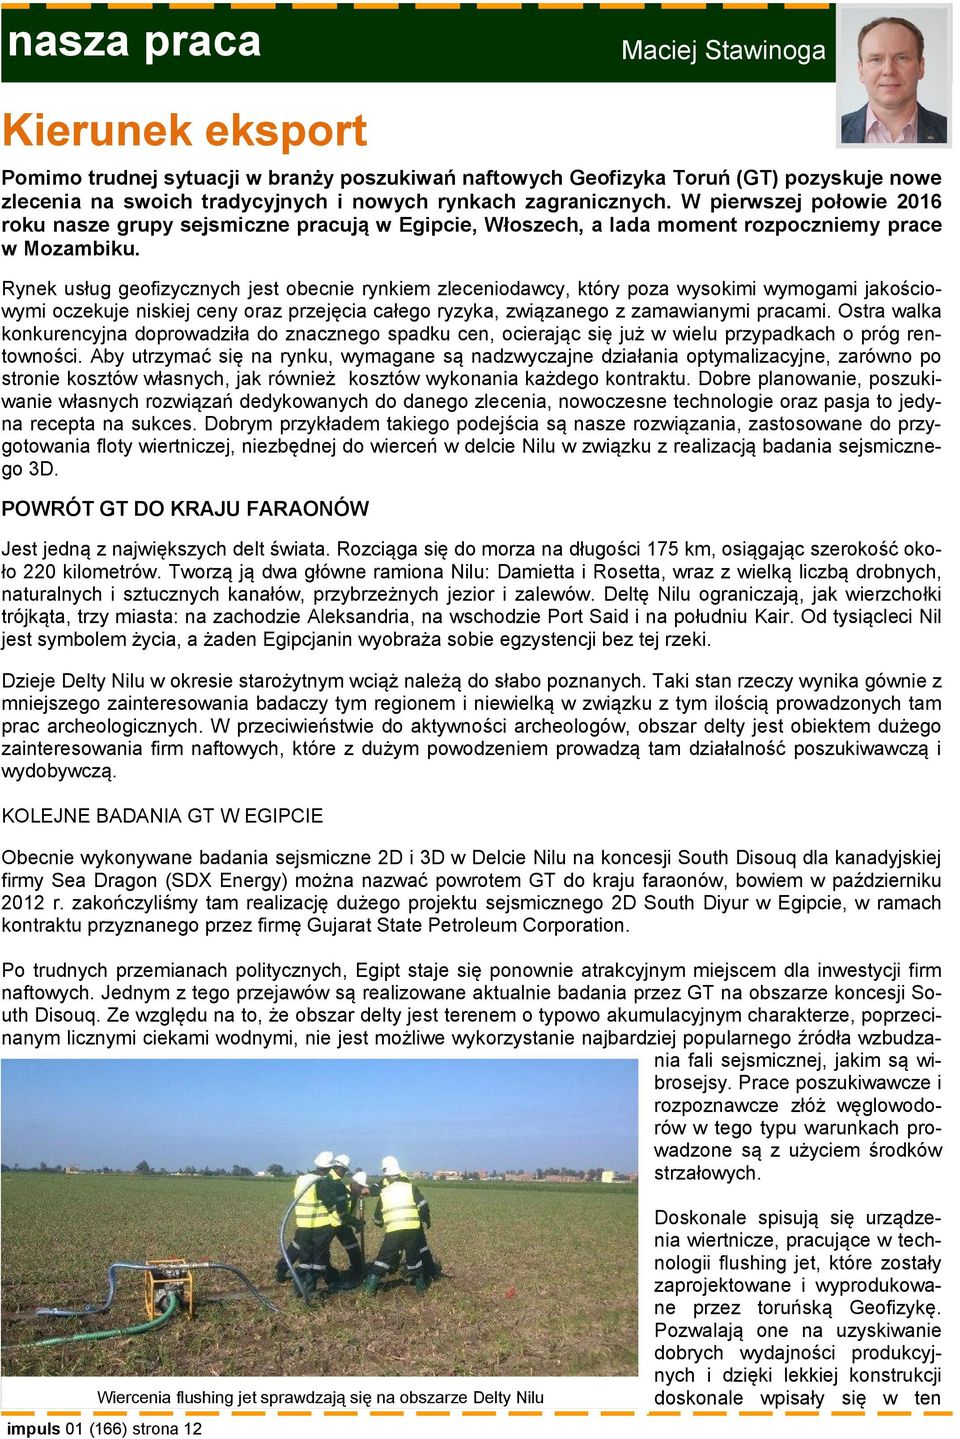 50 lat Geofizyki Toruń! - PDF Free Download